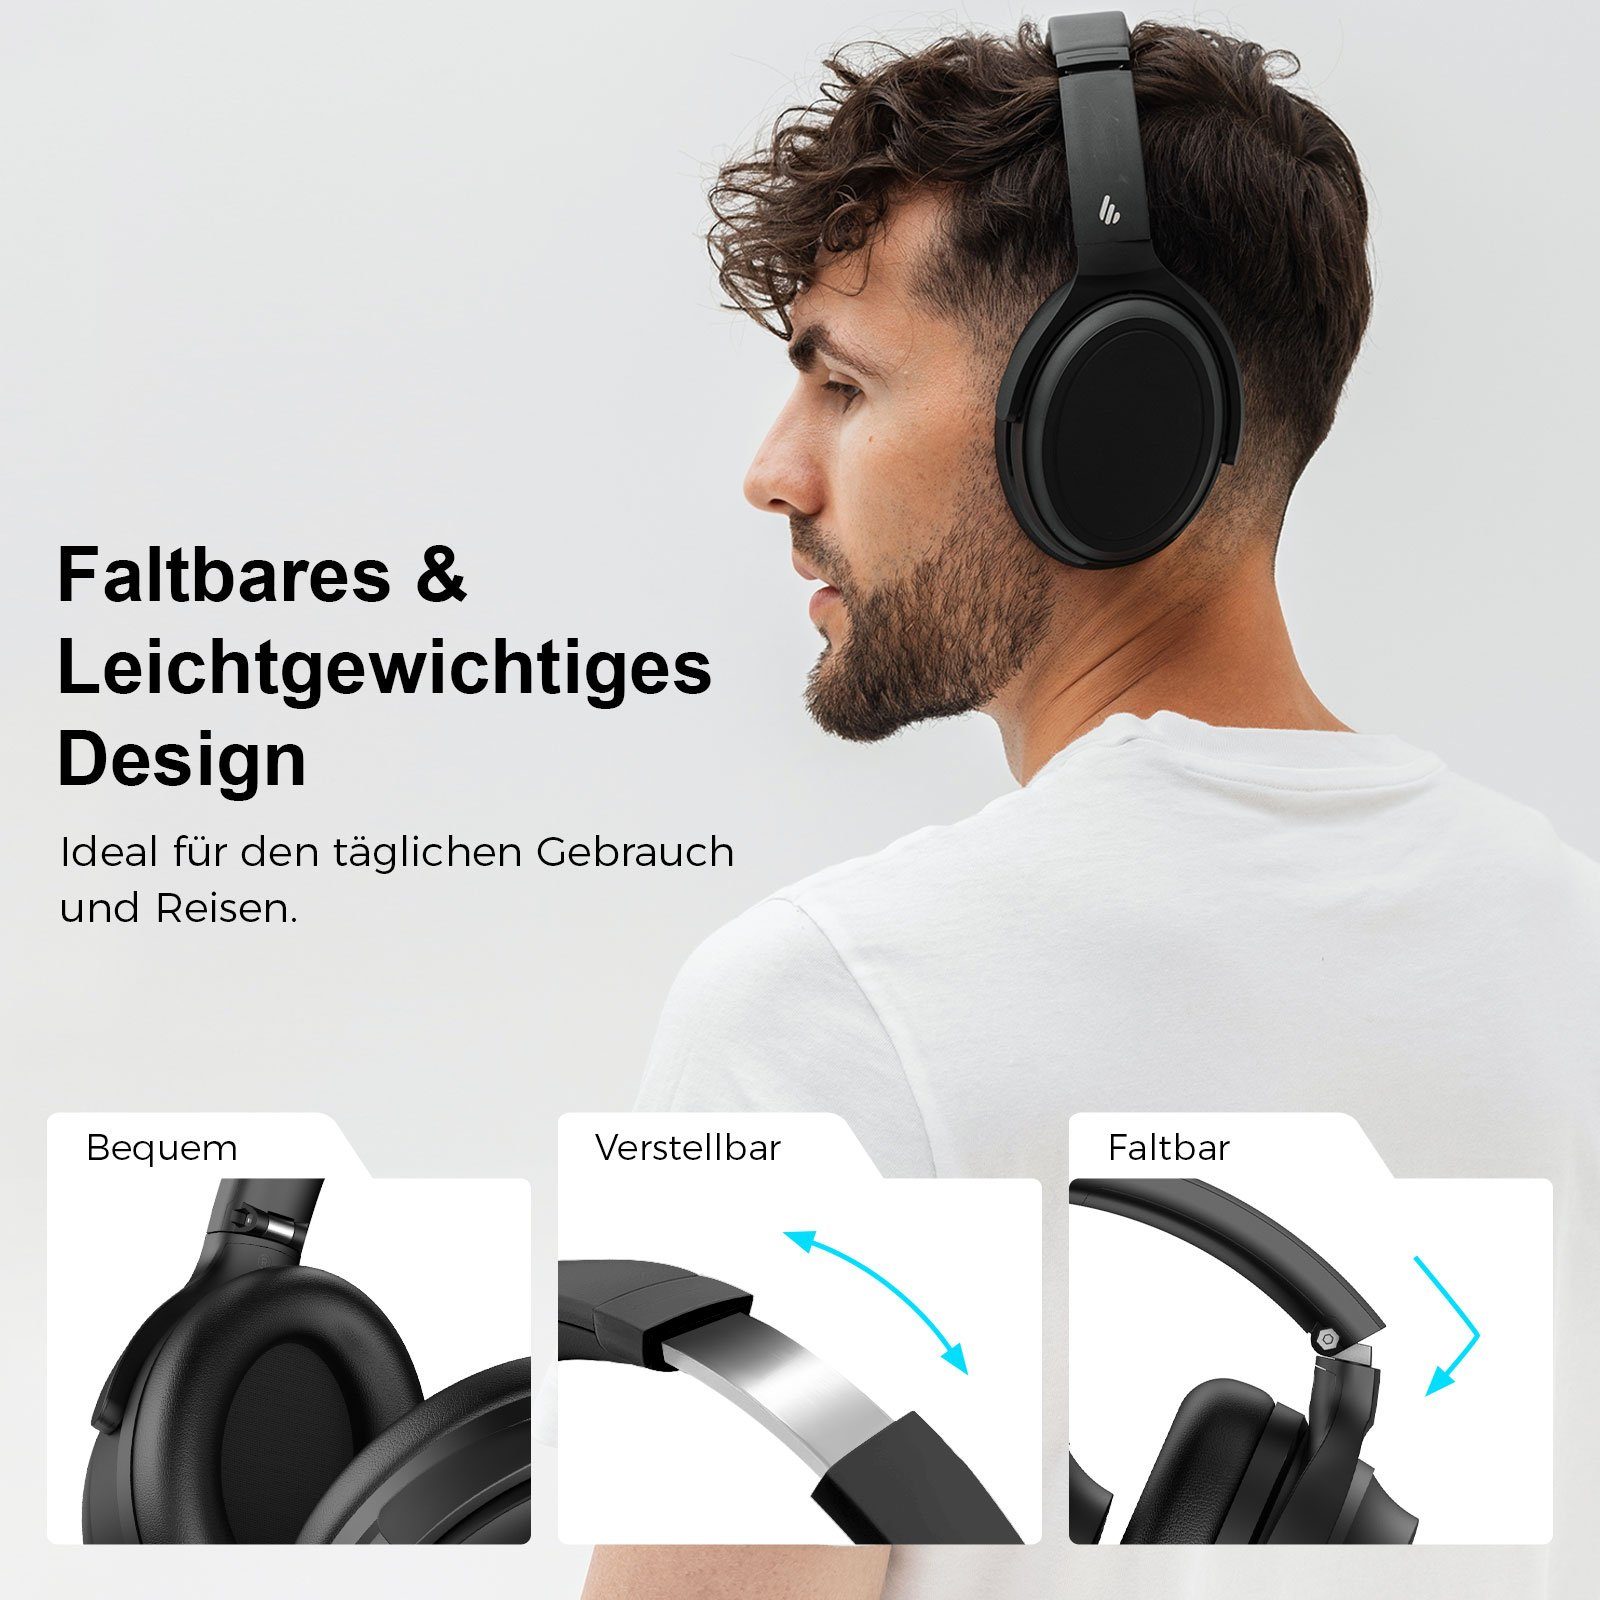 Edifier® WH700NB Kabellose aktive Geräuschunterdrückung Schwarz 5.3, (Aktiver Doppelgeräte-Verbindung) Over-Ear-Kopfhörer Geräuschunterdrückung, Bluetooth